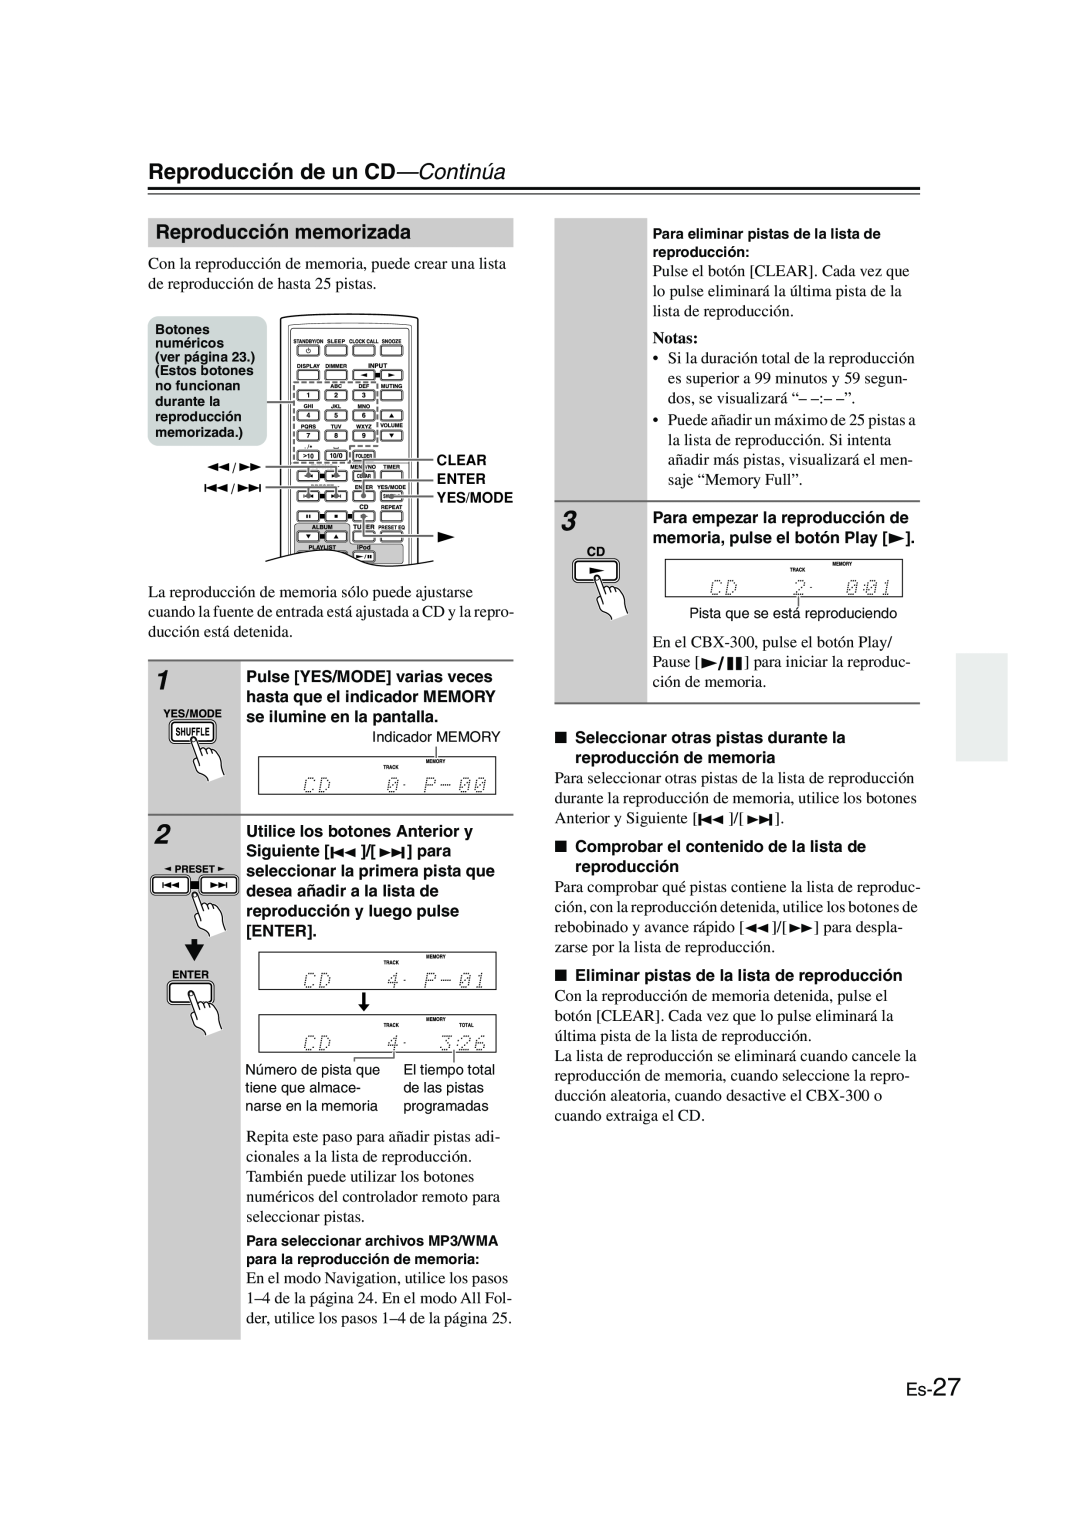 Onkyo CBX-300 instruction manual Reproducción memorizada, Es-27, Reproducción de un CD—Continúa, Notas 